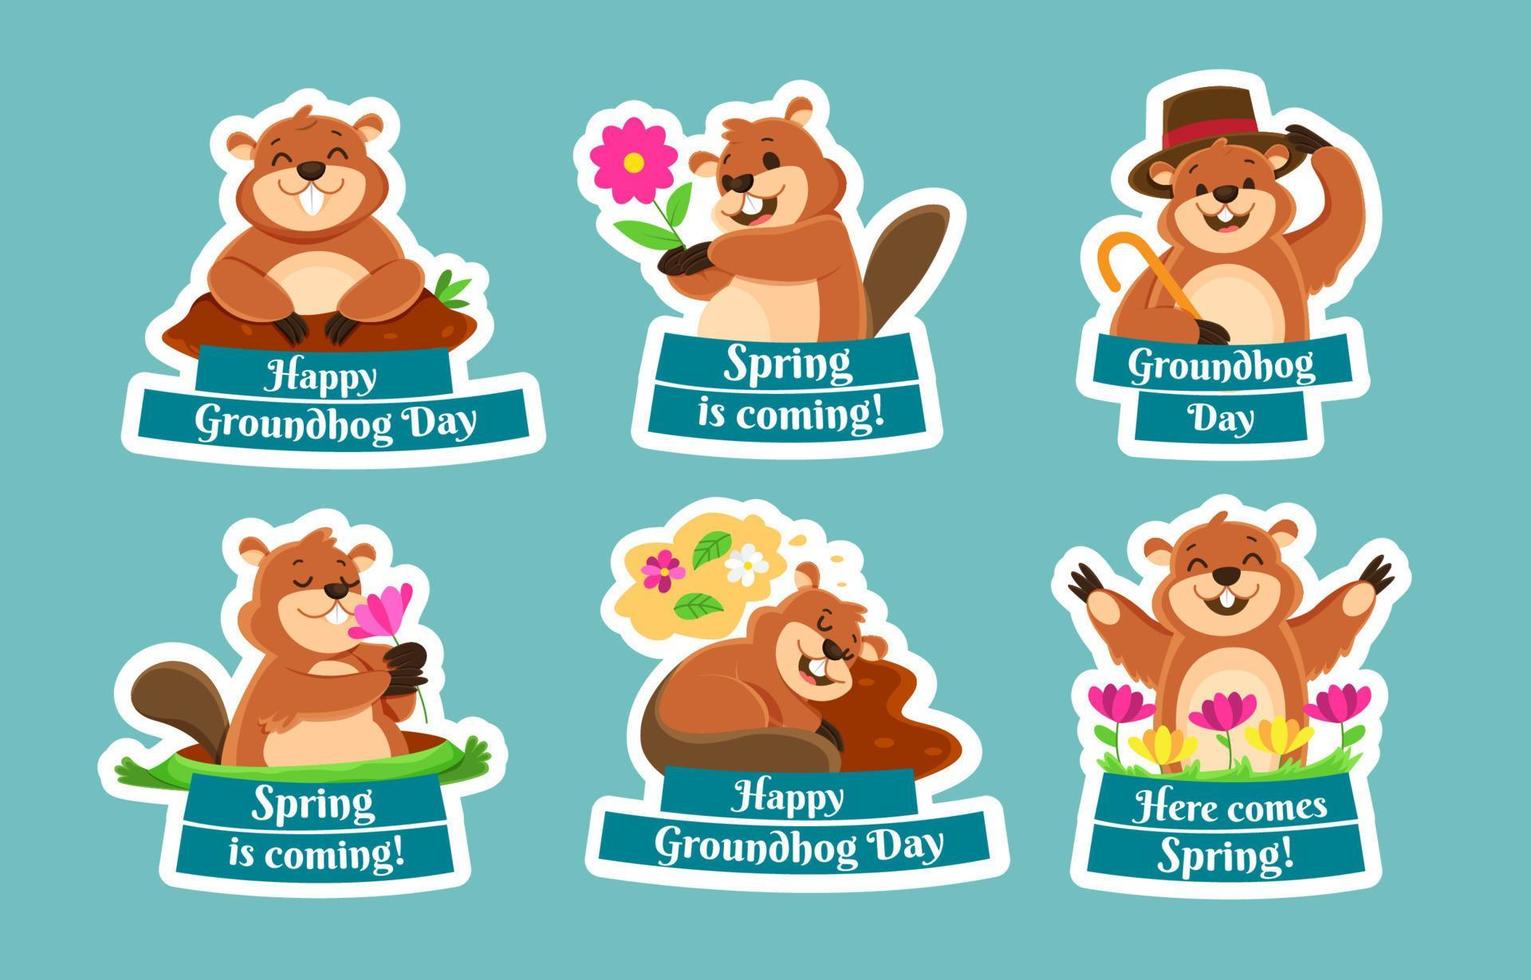 Cute Groundhog Welcoming Spring Sticker vector